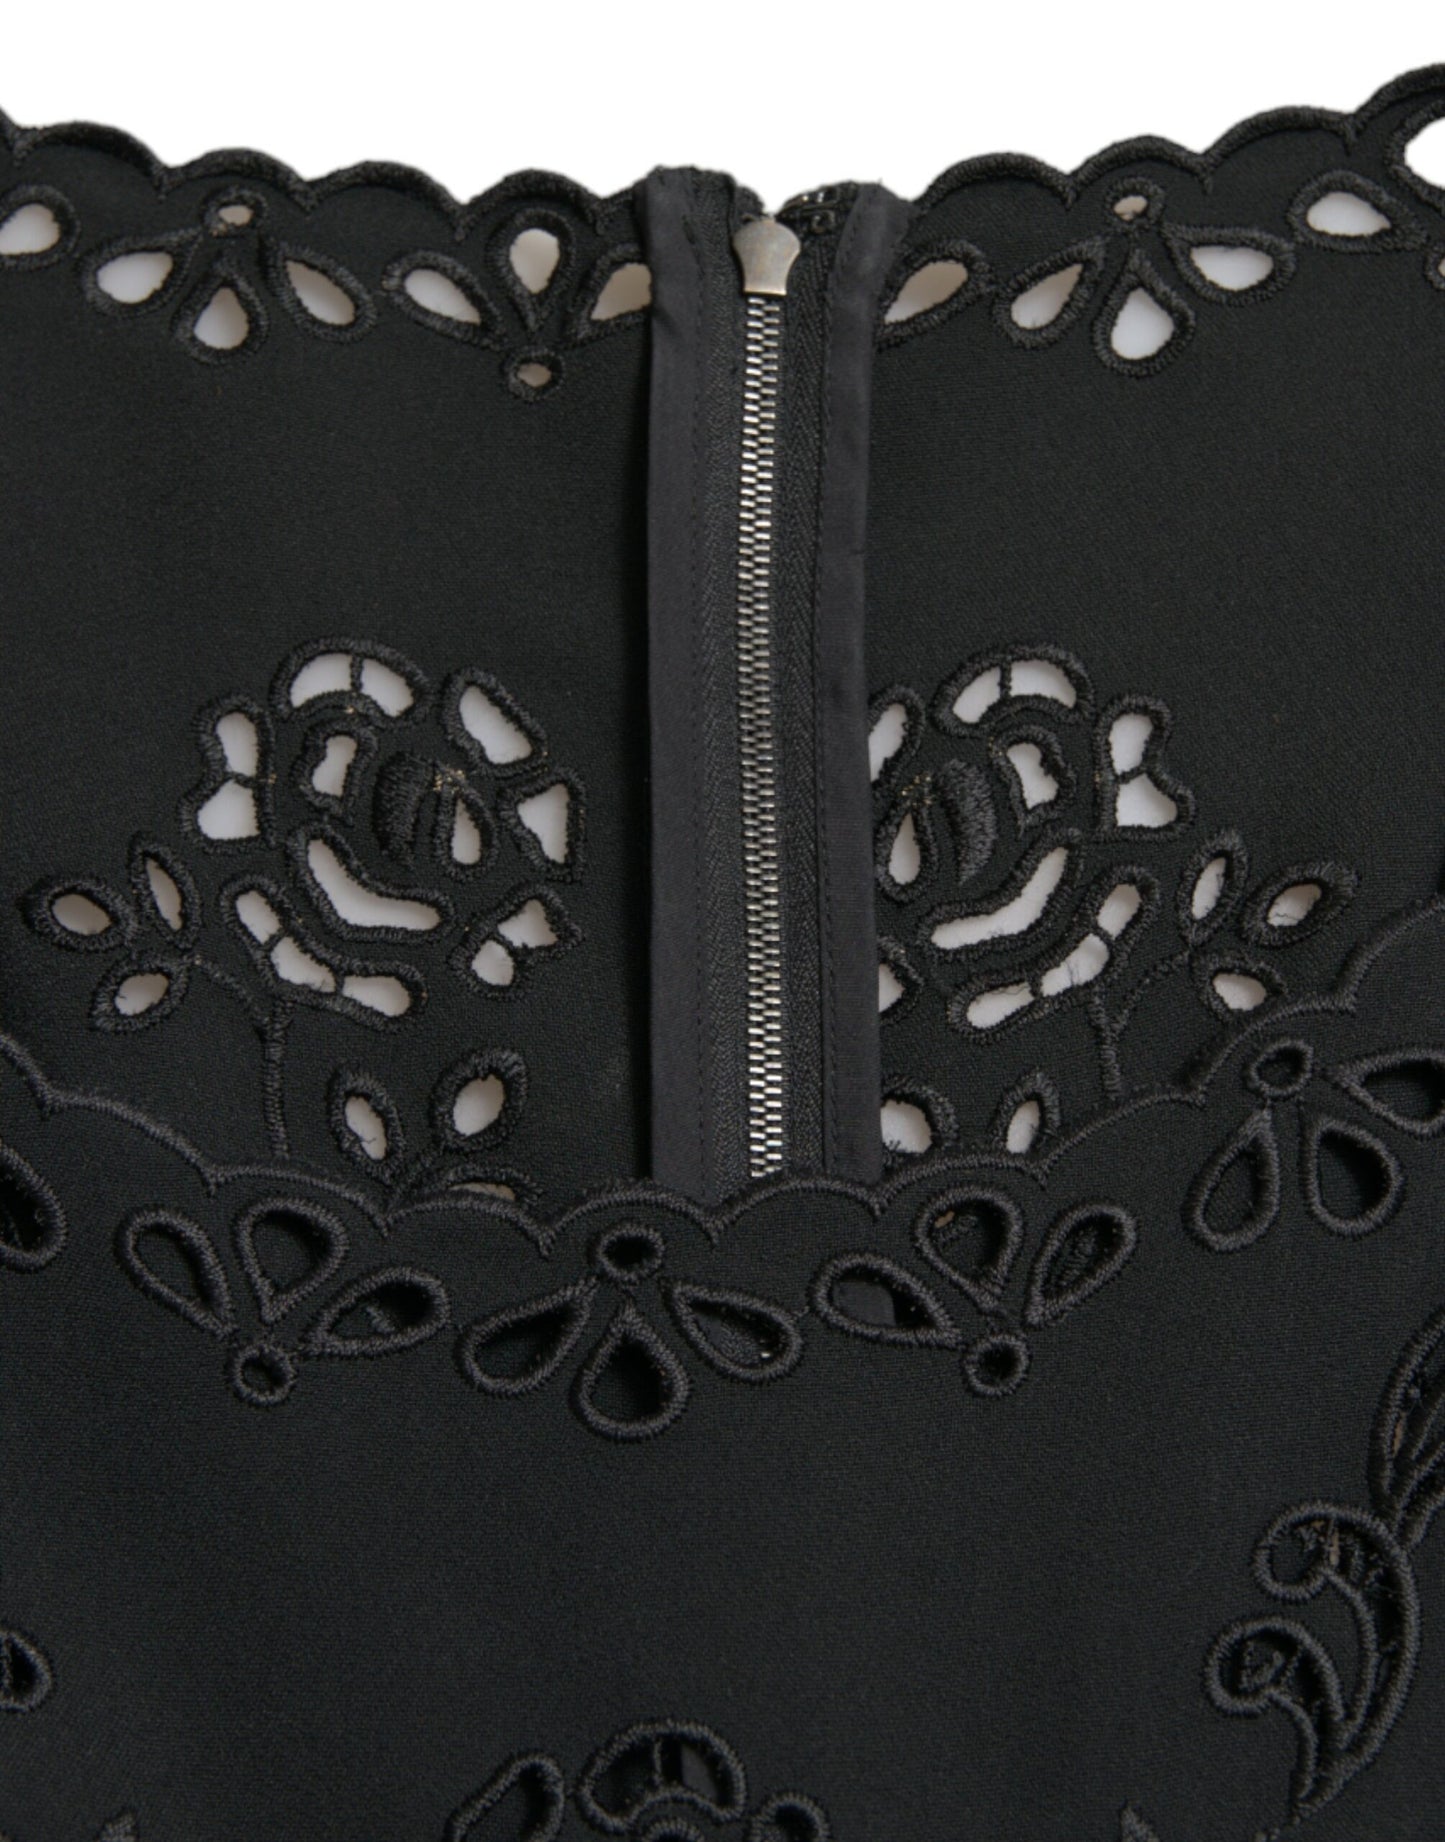 Black Floral Lace Bodycon Midi Dress